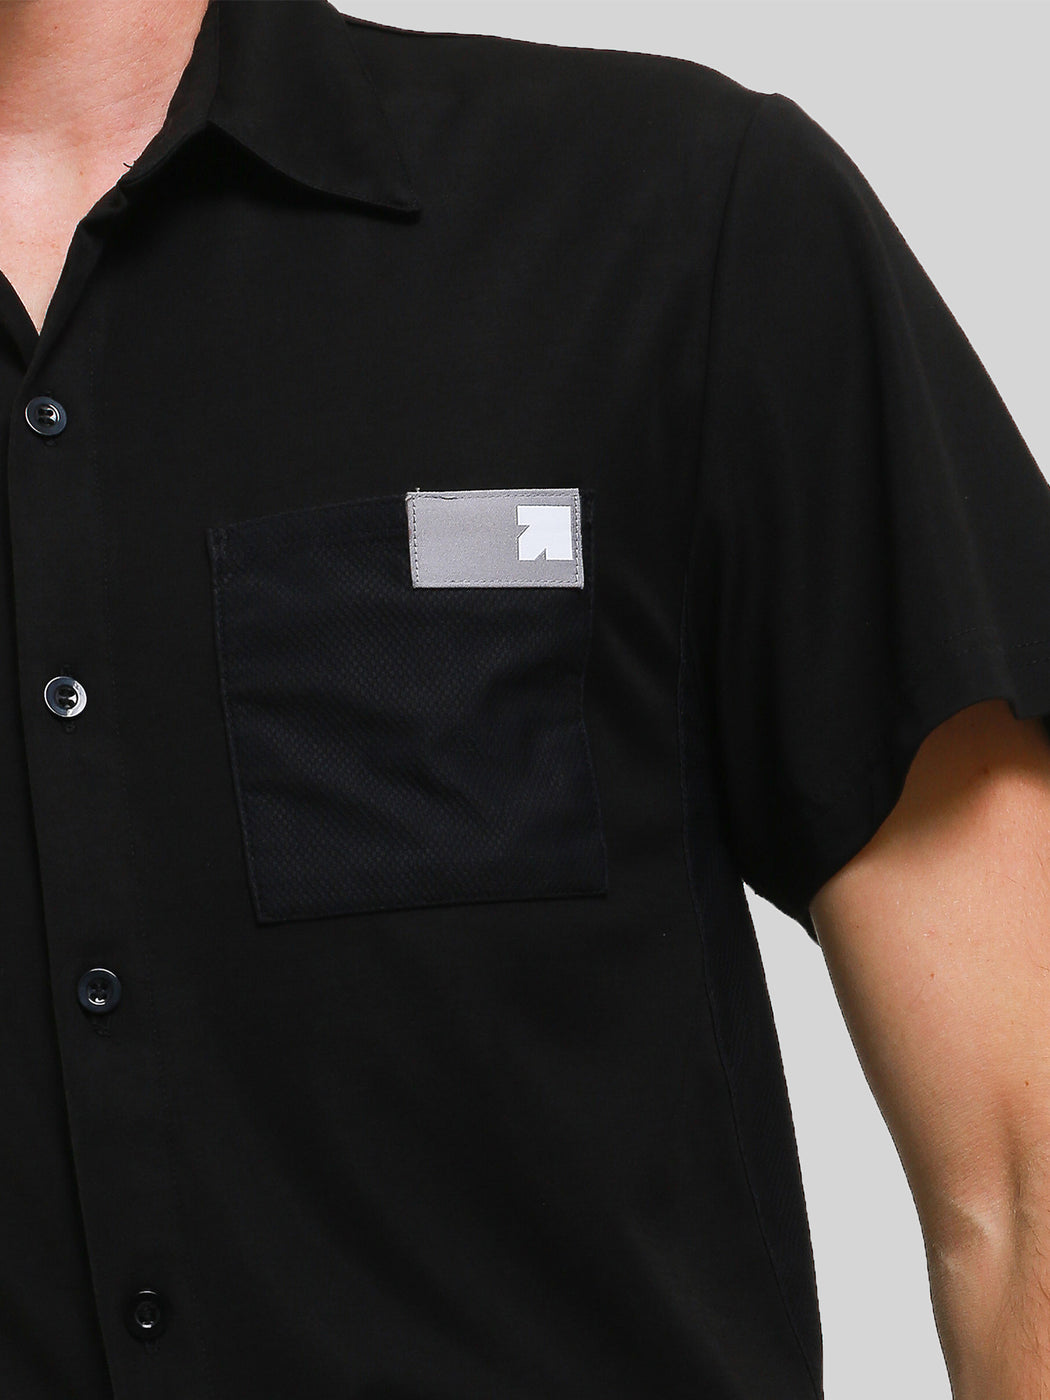 Unisex Ultimate Utilitarian Shirt Male Black